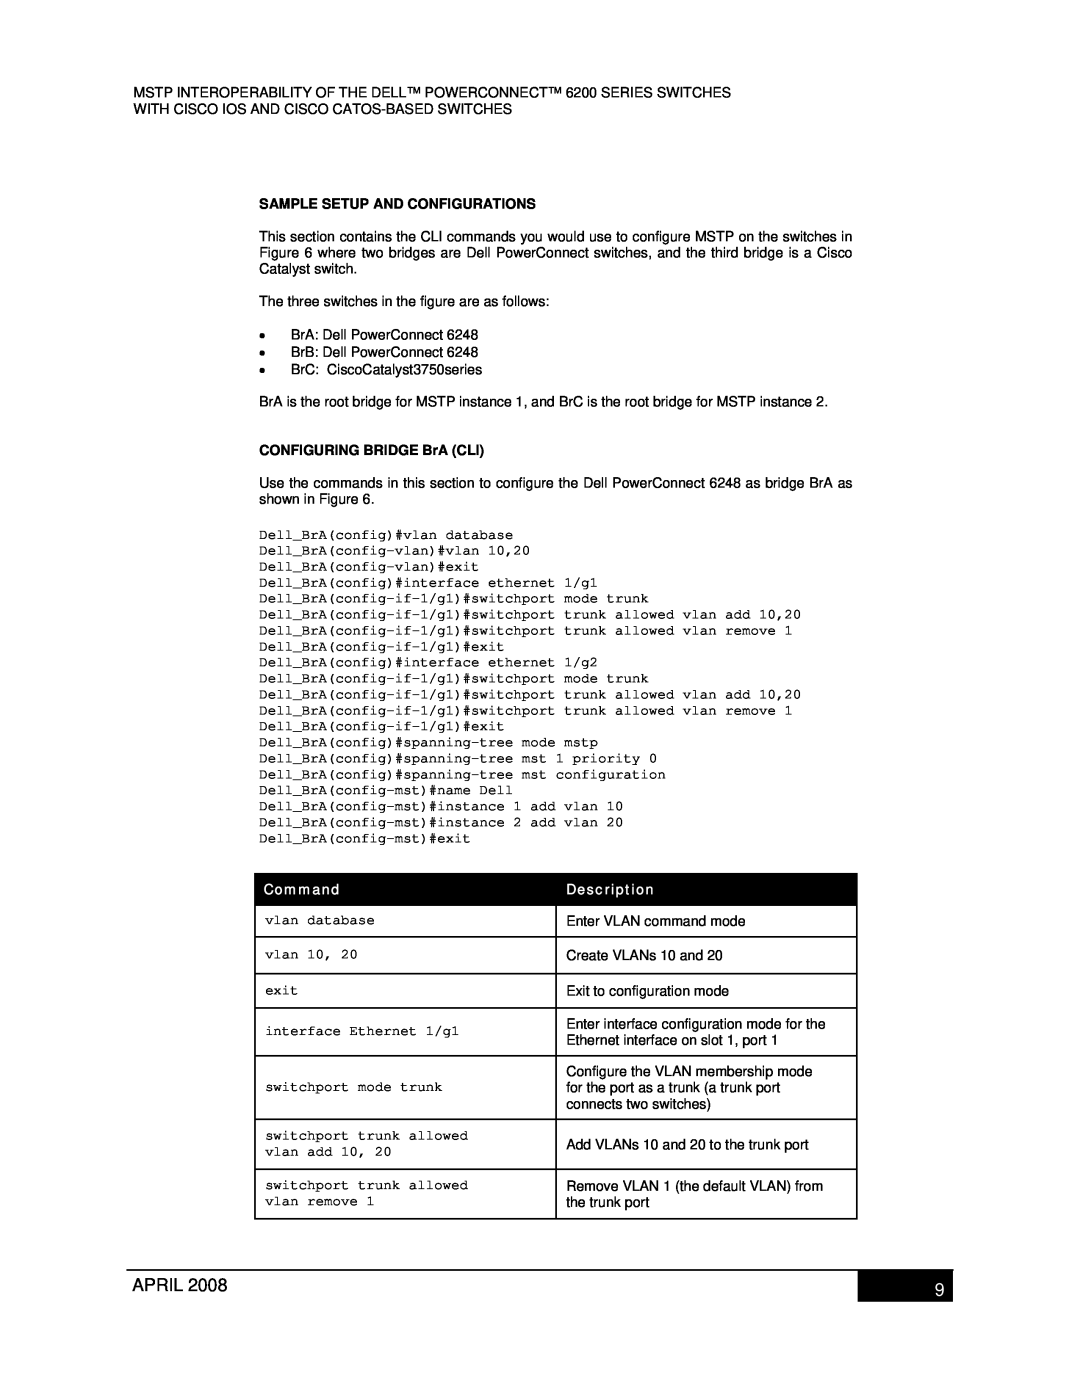 Dell 6200 manual Sample Setup And Configurations, CONFIGURING BRIDGE BrA CLI, Command, Description, April 